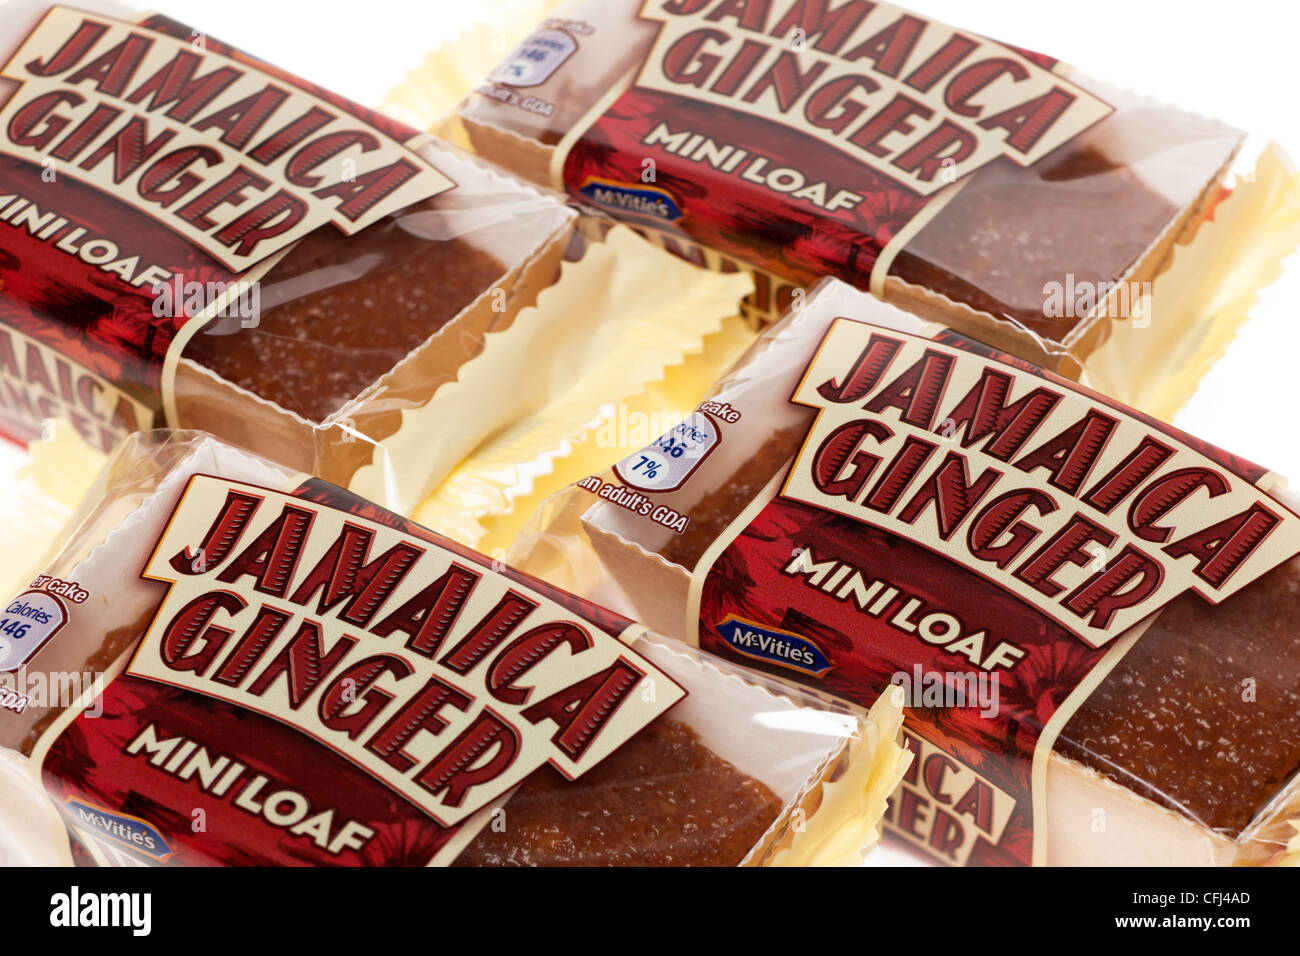 Mcvites Jamaica ginger mini loaves Stock Photo